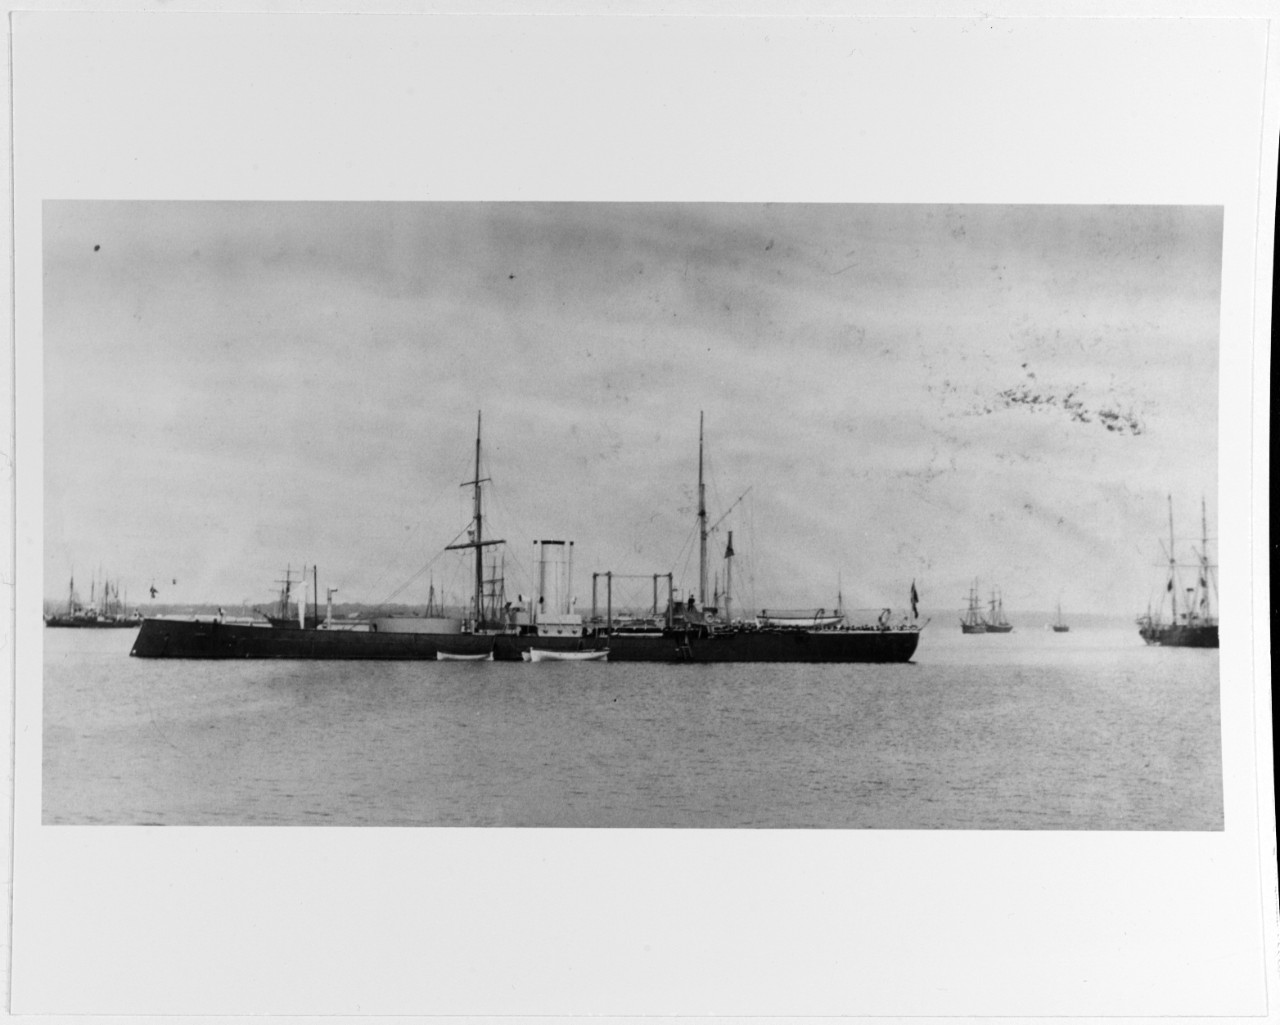 LINDORMEN (Danish Coast Defense Ship, 1868)